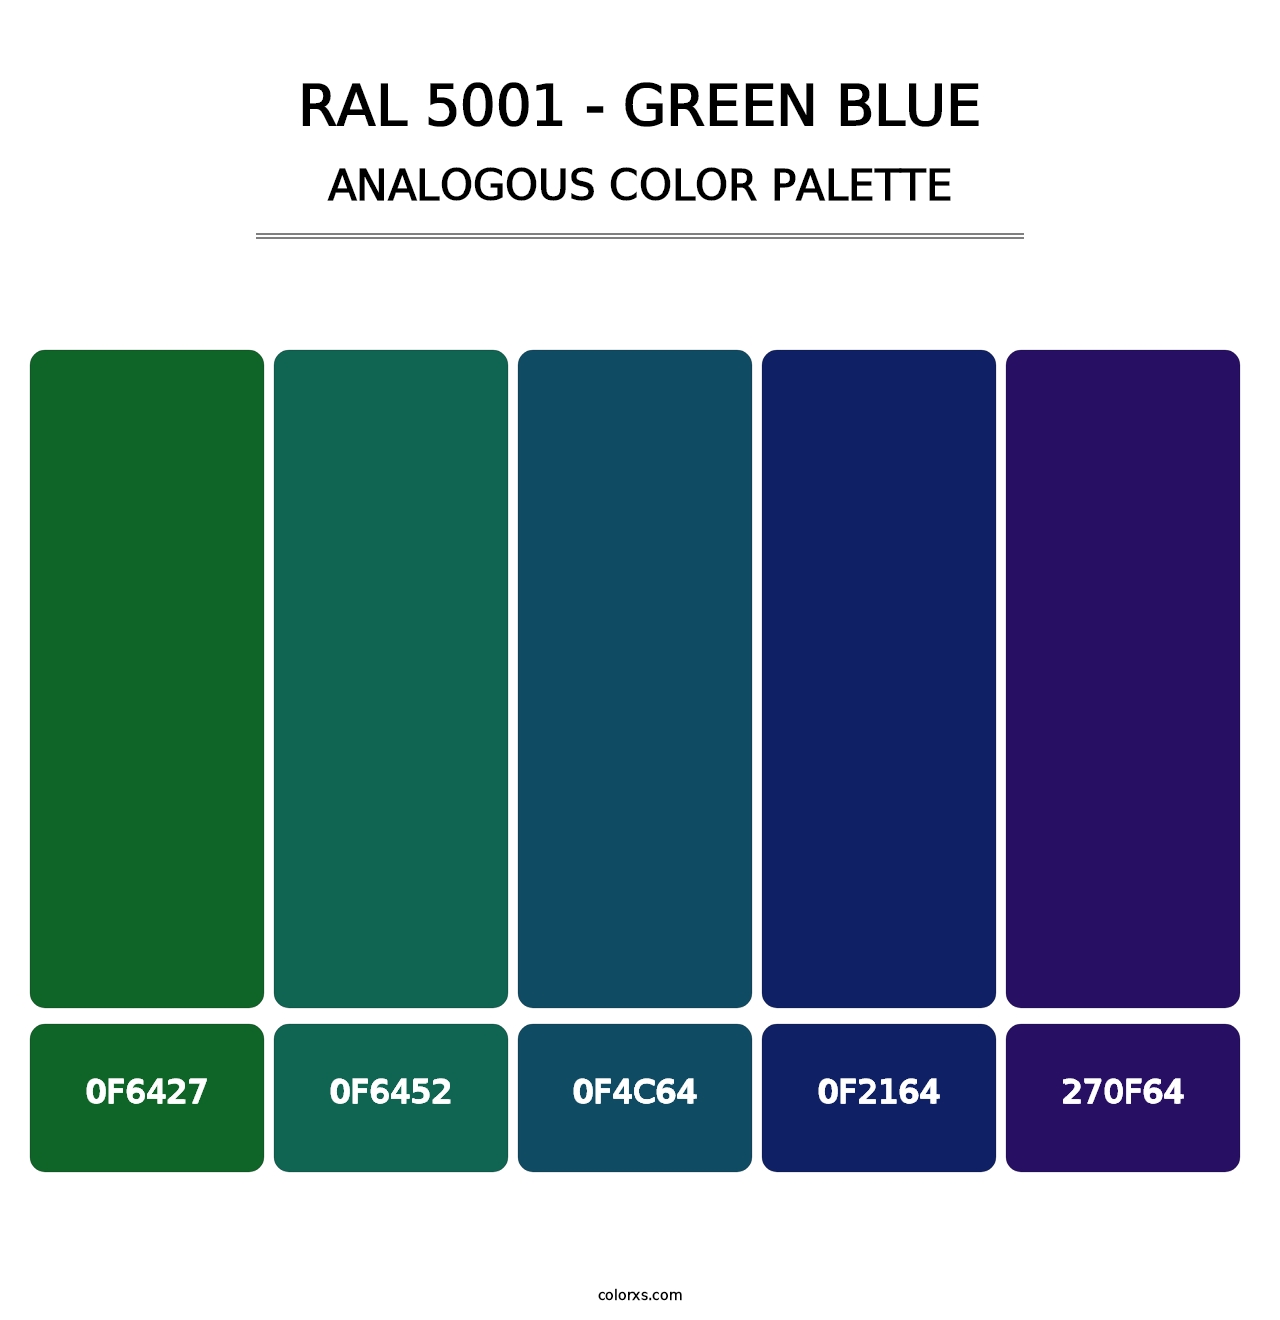 RAL 5001 - Green Blue - Analogous Color Palette